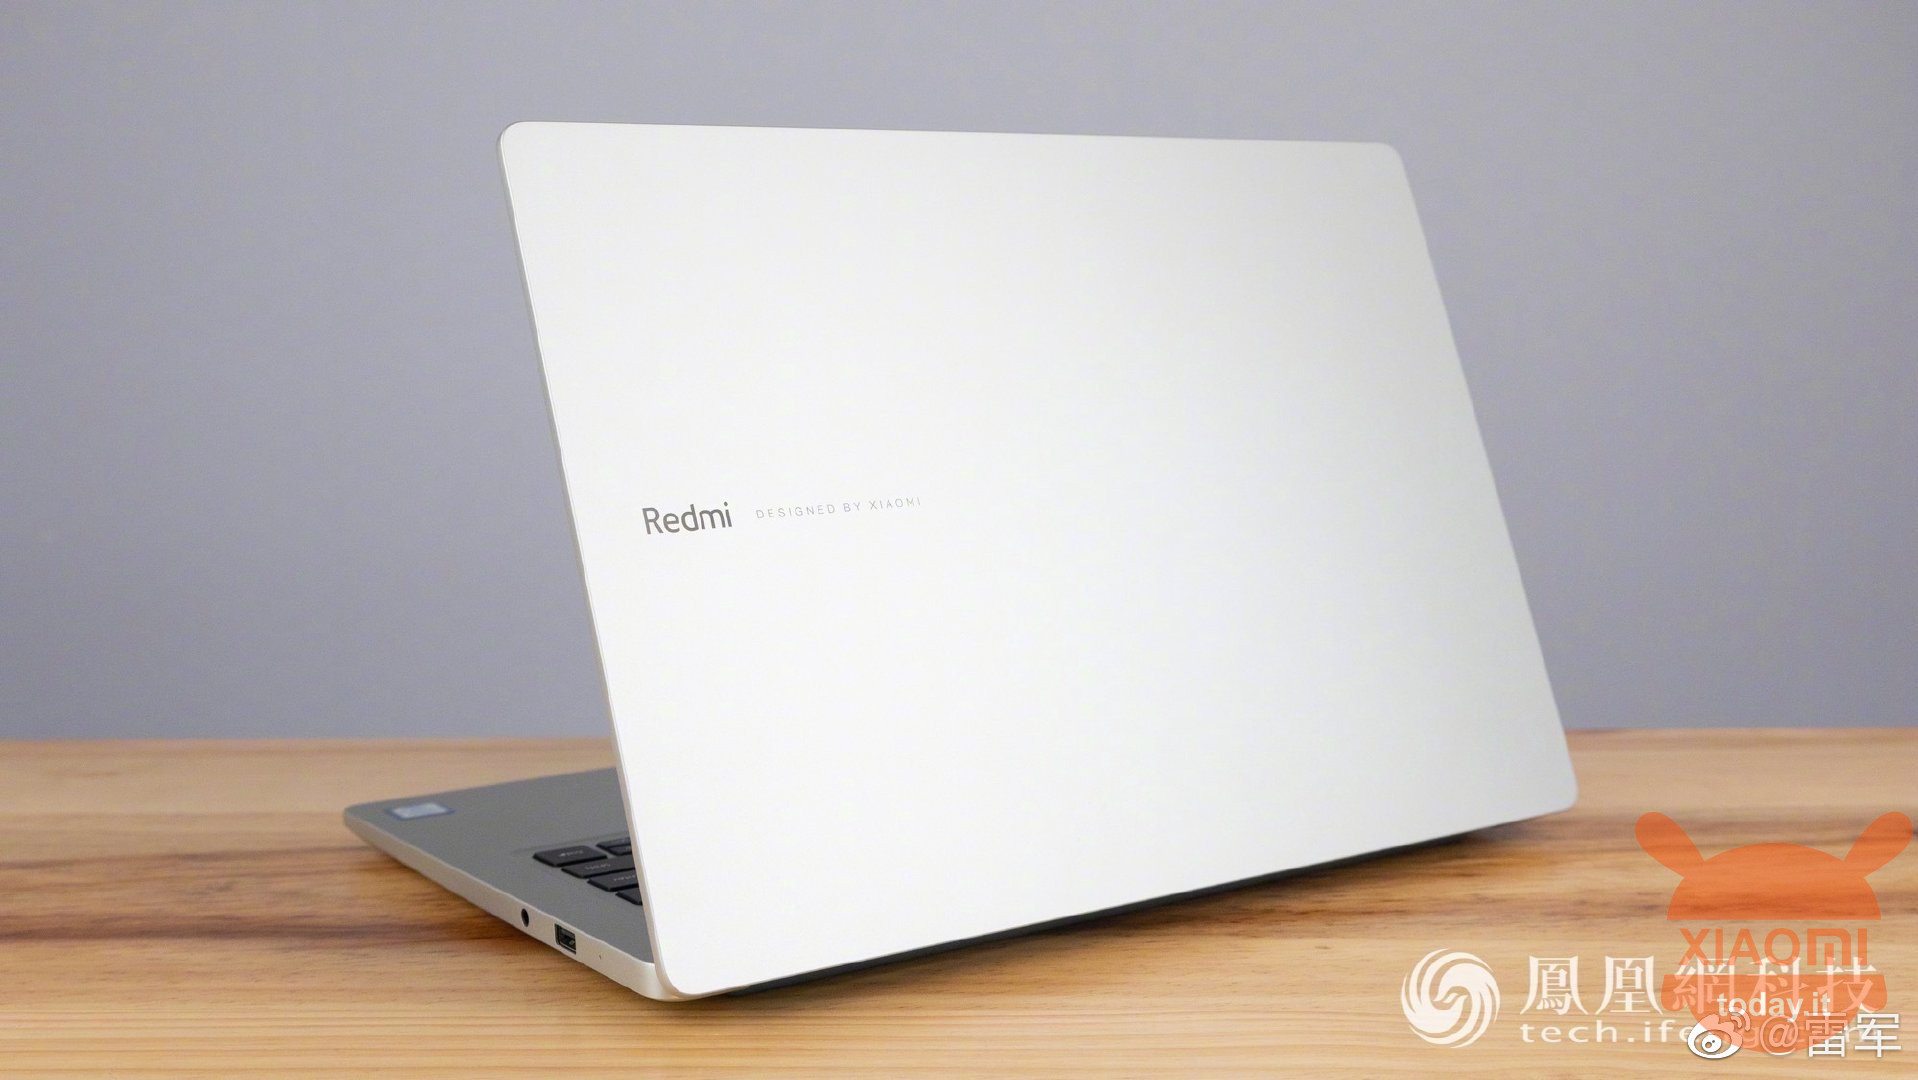 RedmiBook 14 Enhanced Edition